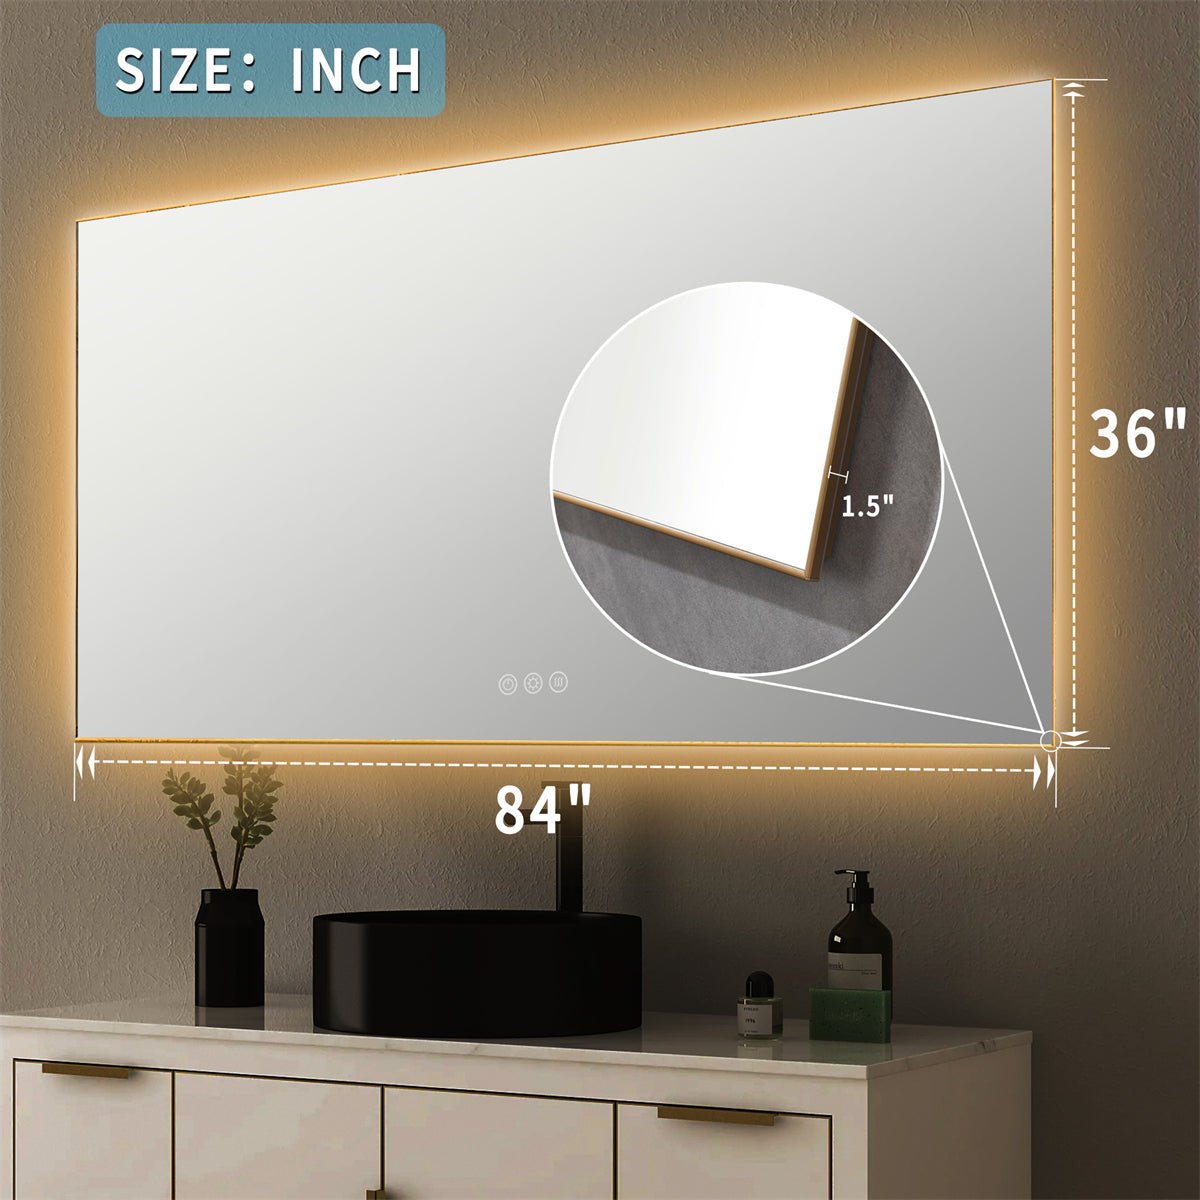 ExBrite 84" x 36" LED Mirror Bathroom Vanity Mirror with Back Light, Wall Mount Anti-Fog Memory Large Adjustable Vanity Mirror